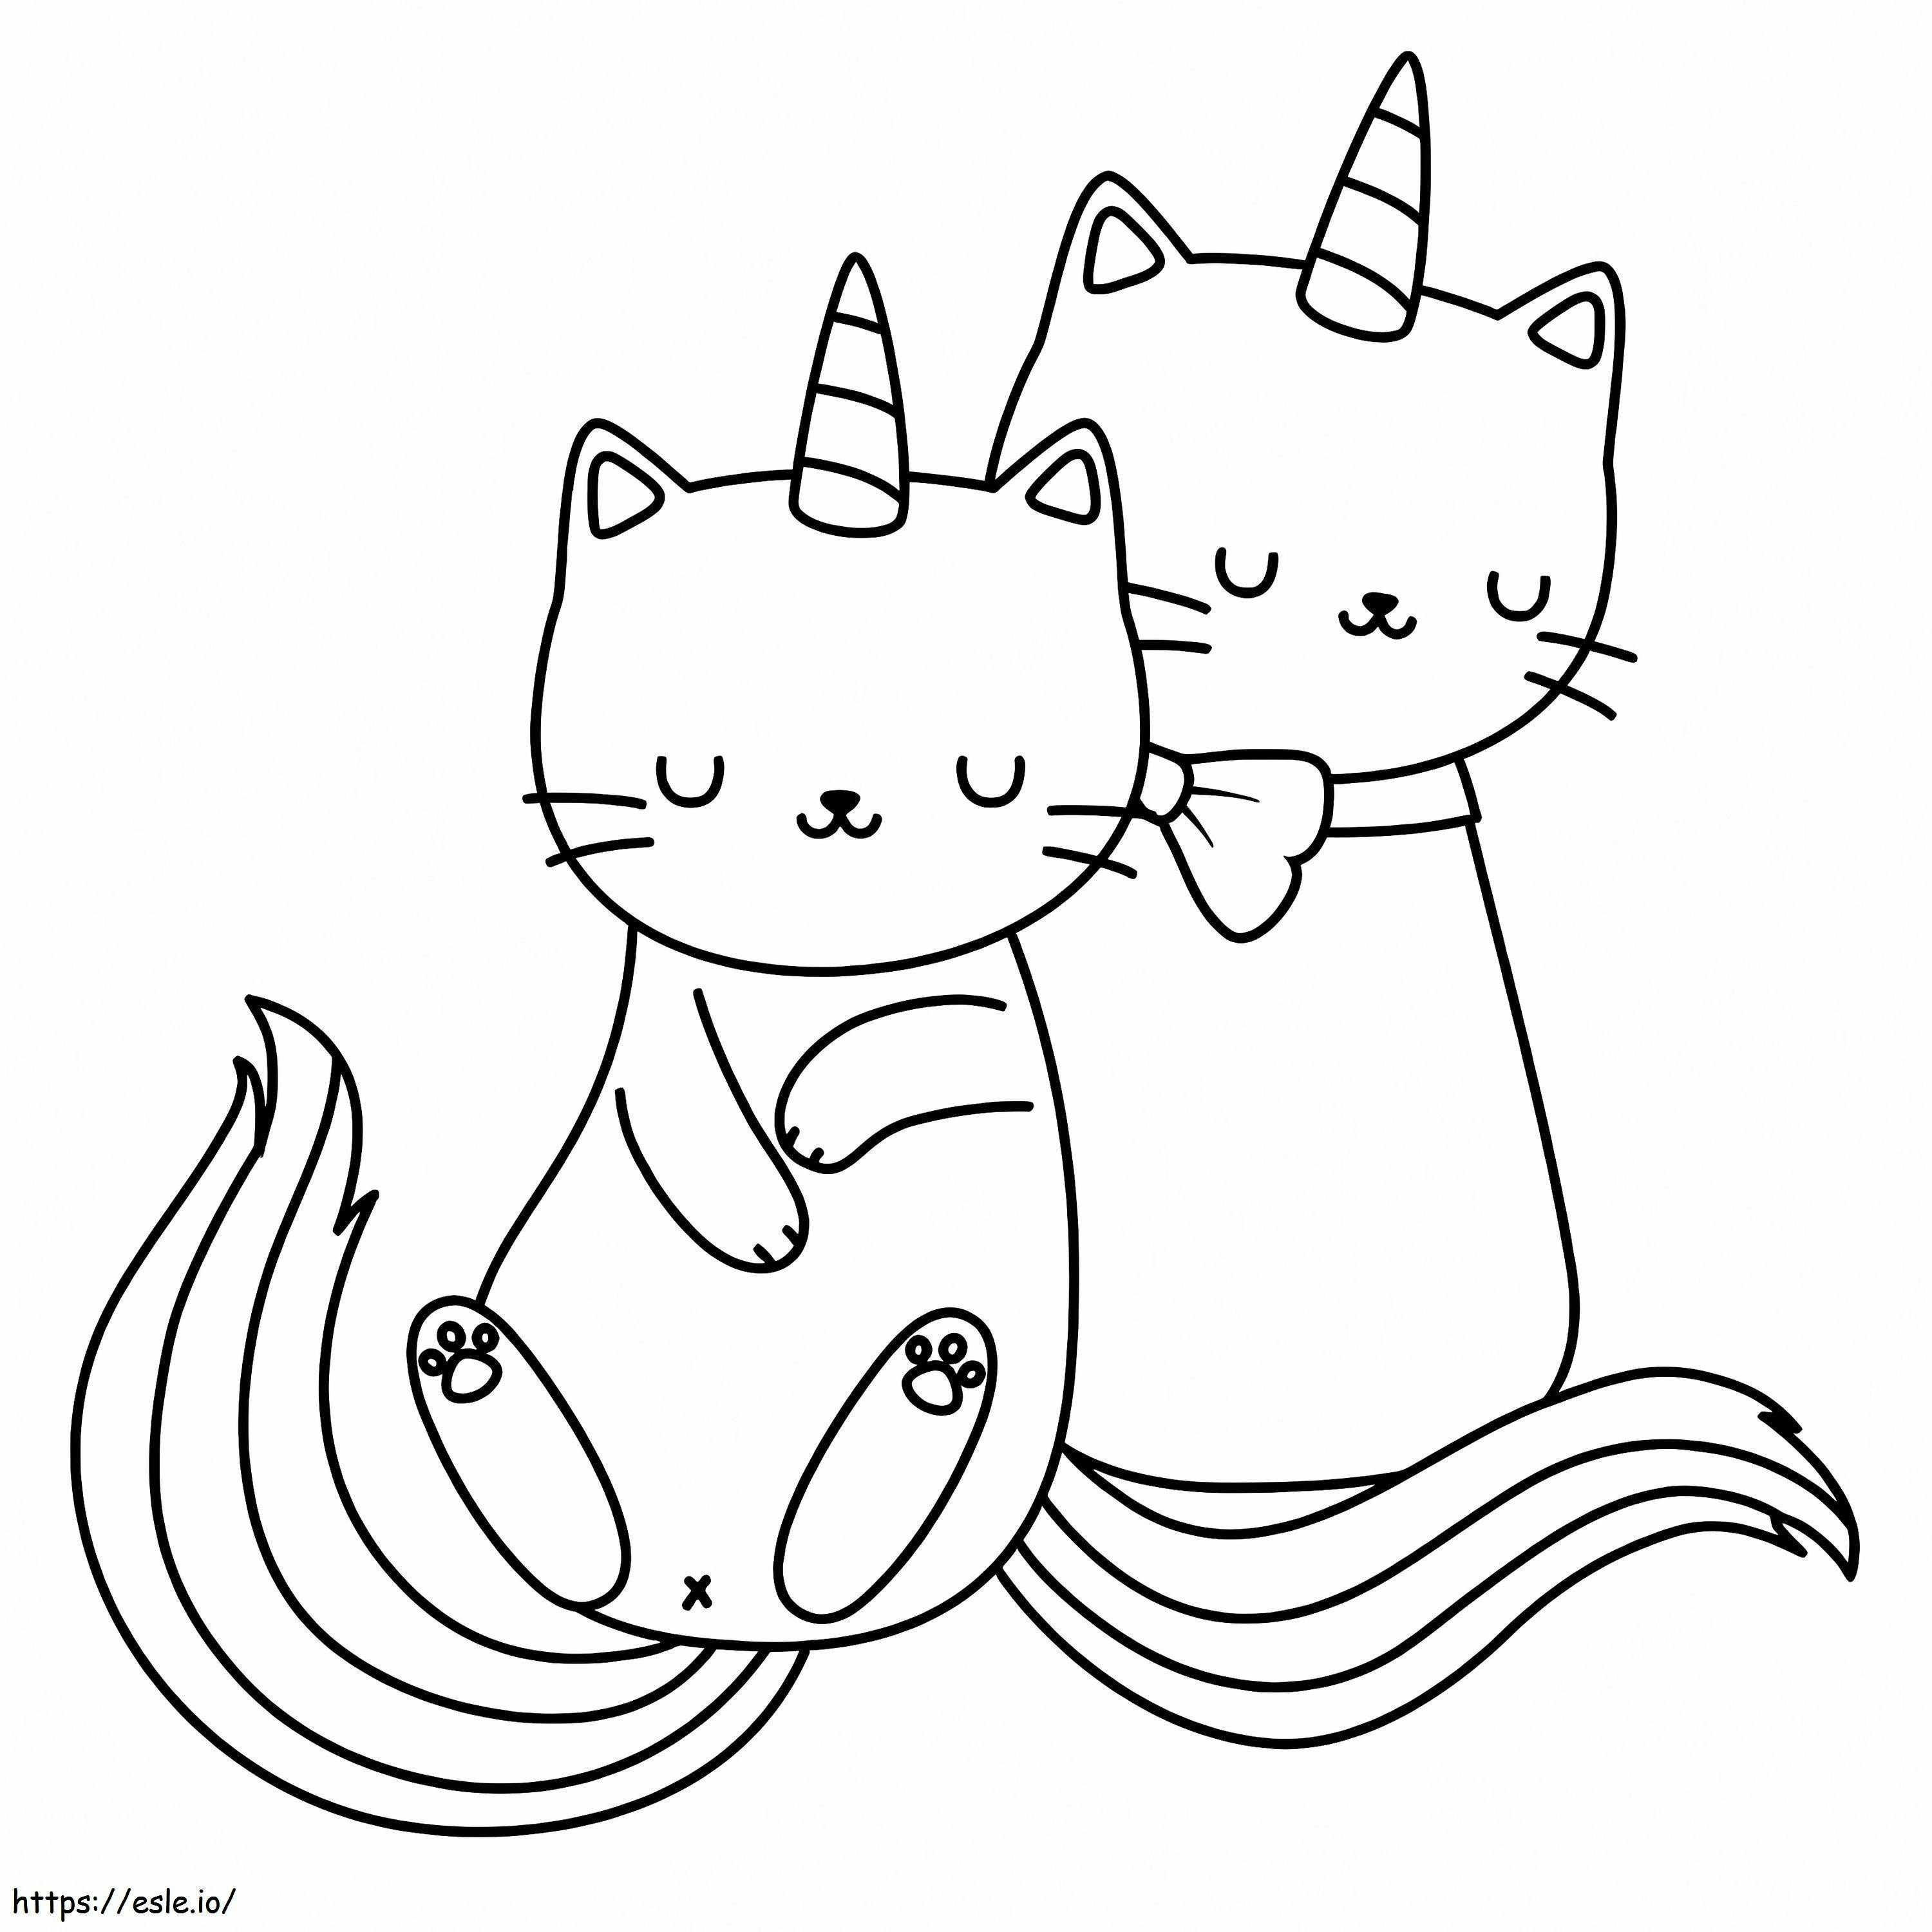 Couple Unicorn Cat coloring page